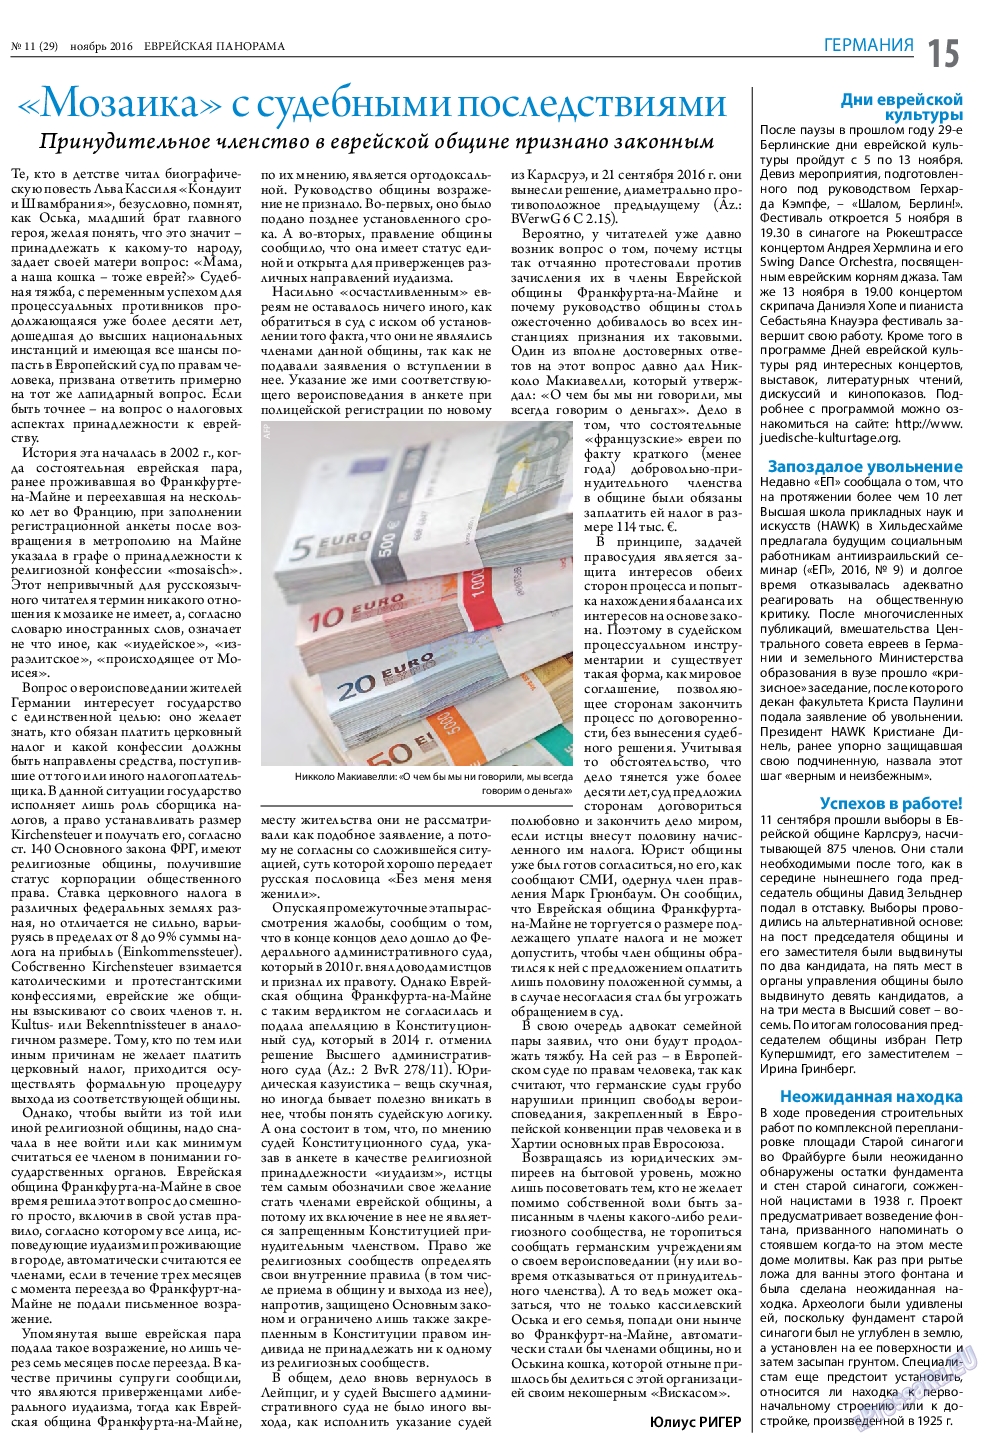 Еврейская панорама, газета. 2016 №11 стр.15